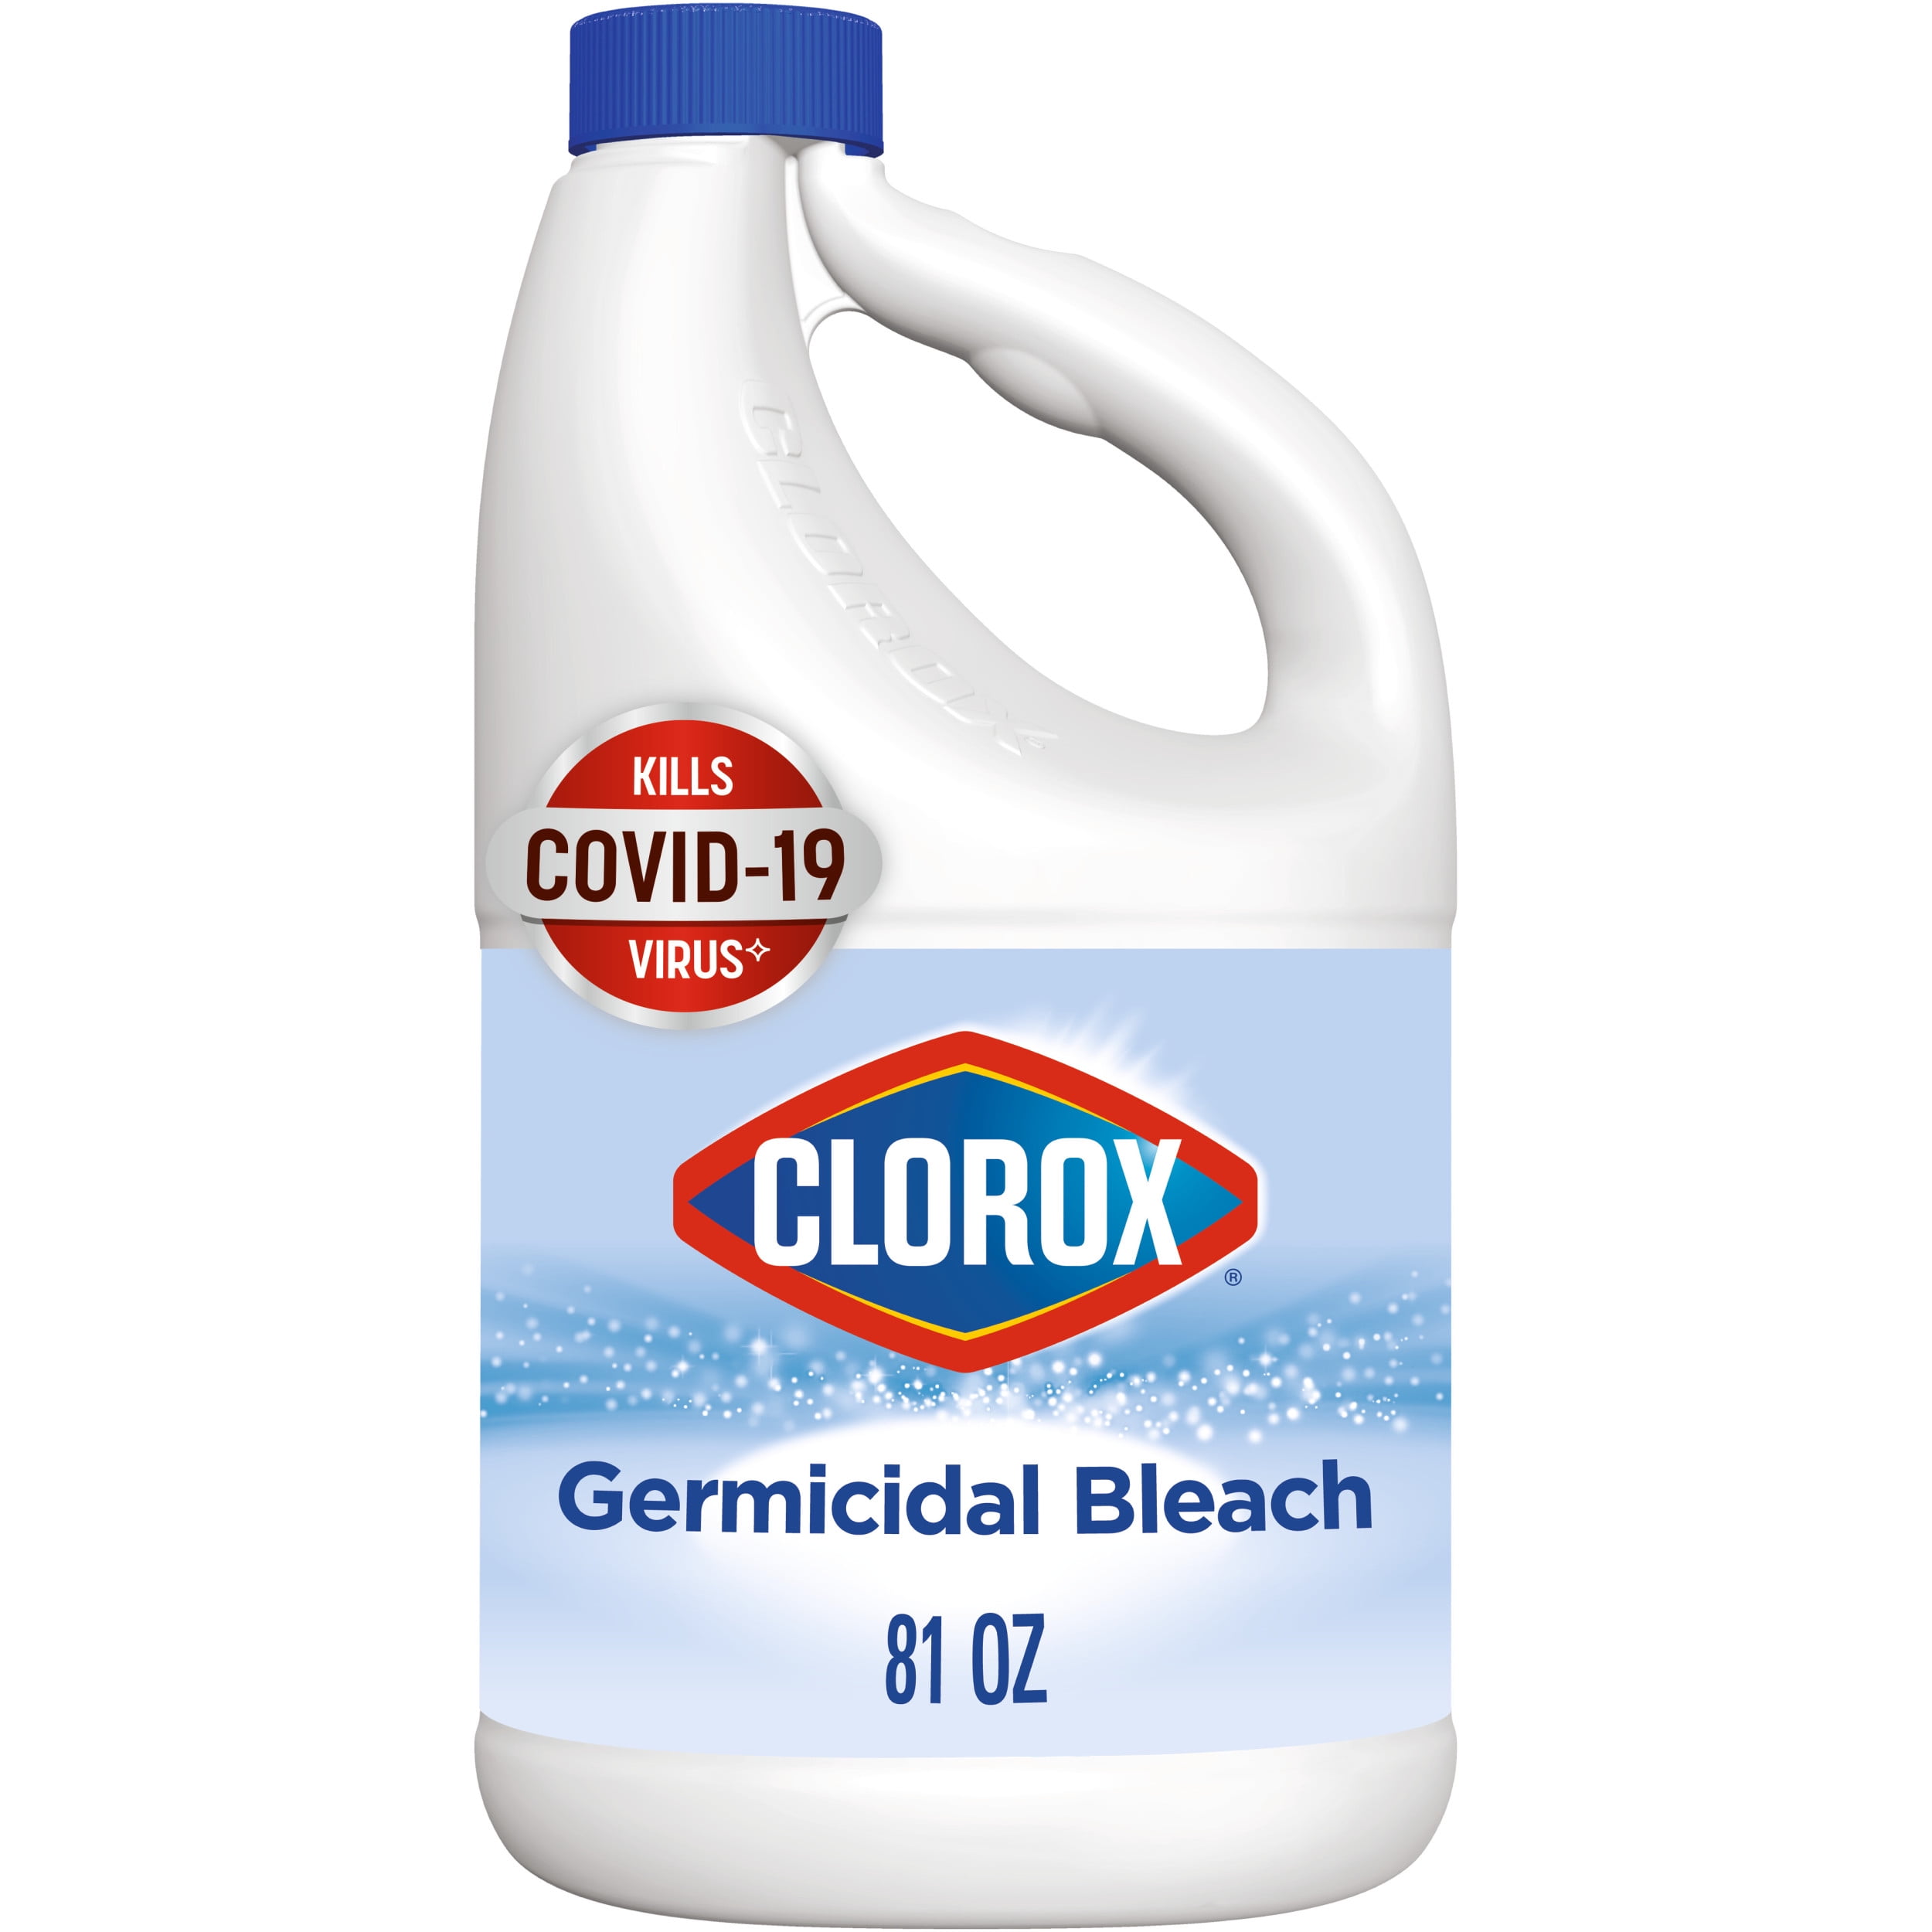 Clorox Germicidal Bleach, Regular Scent, 81 fl oz